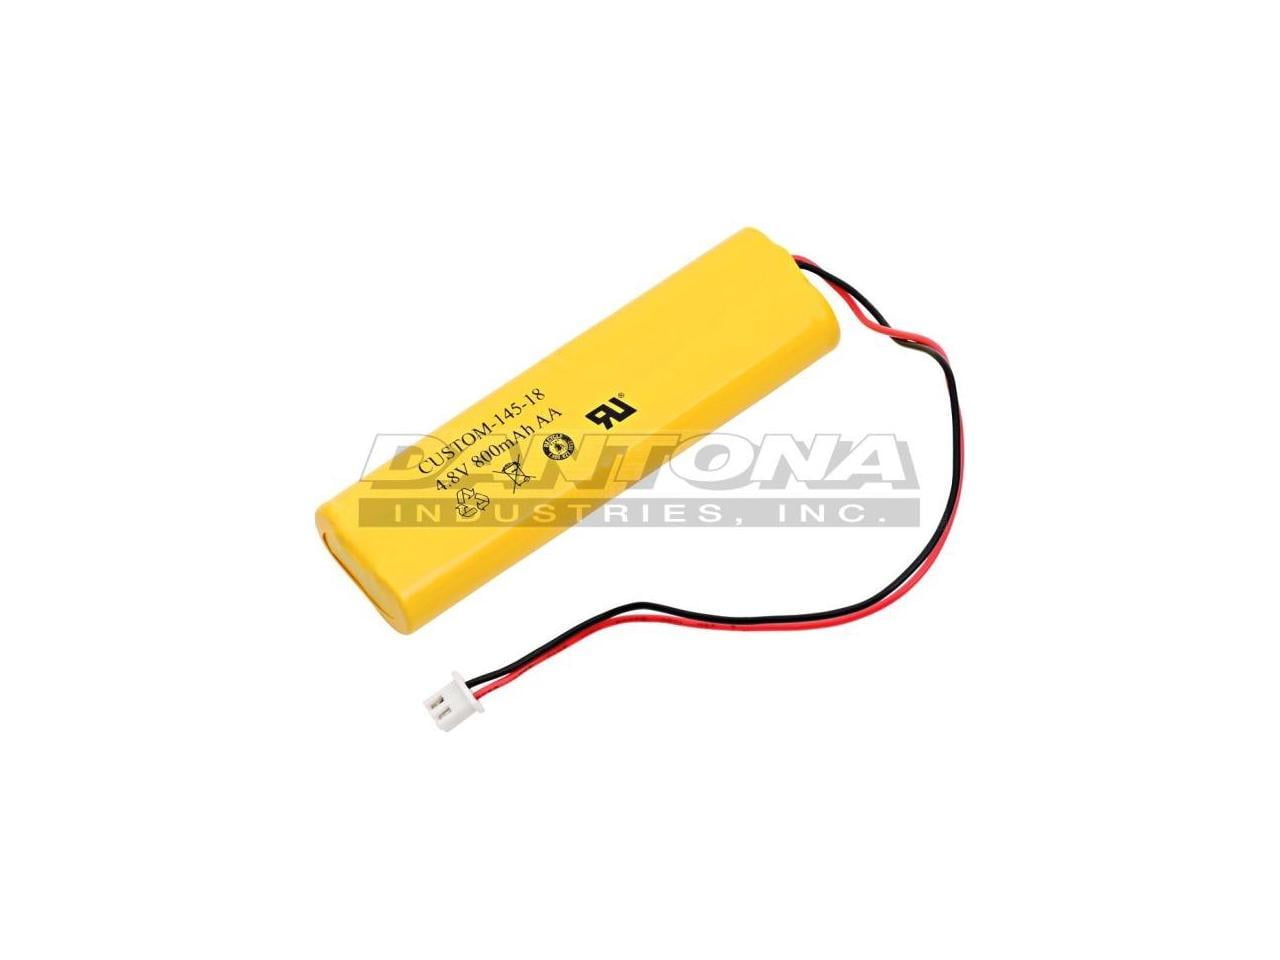 UPC 728286011502 product image for Dantona CUSTOM-145-18 4.8V Replacement Battery 1000 mAh for Emergency Lighting | upcitemdb.com